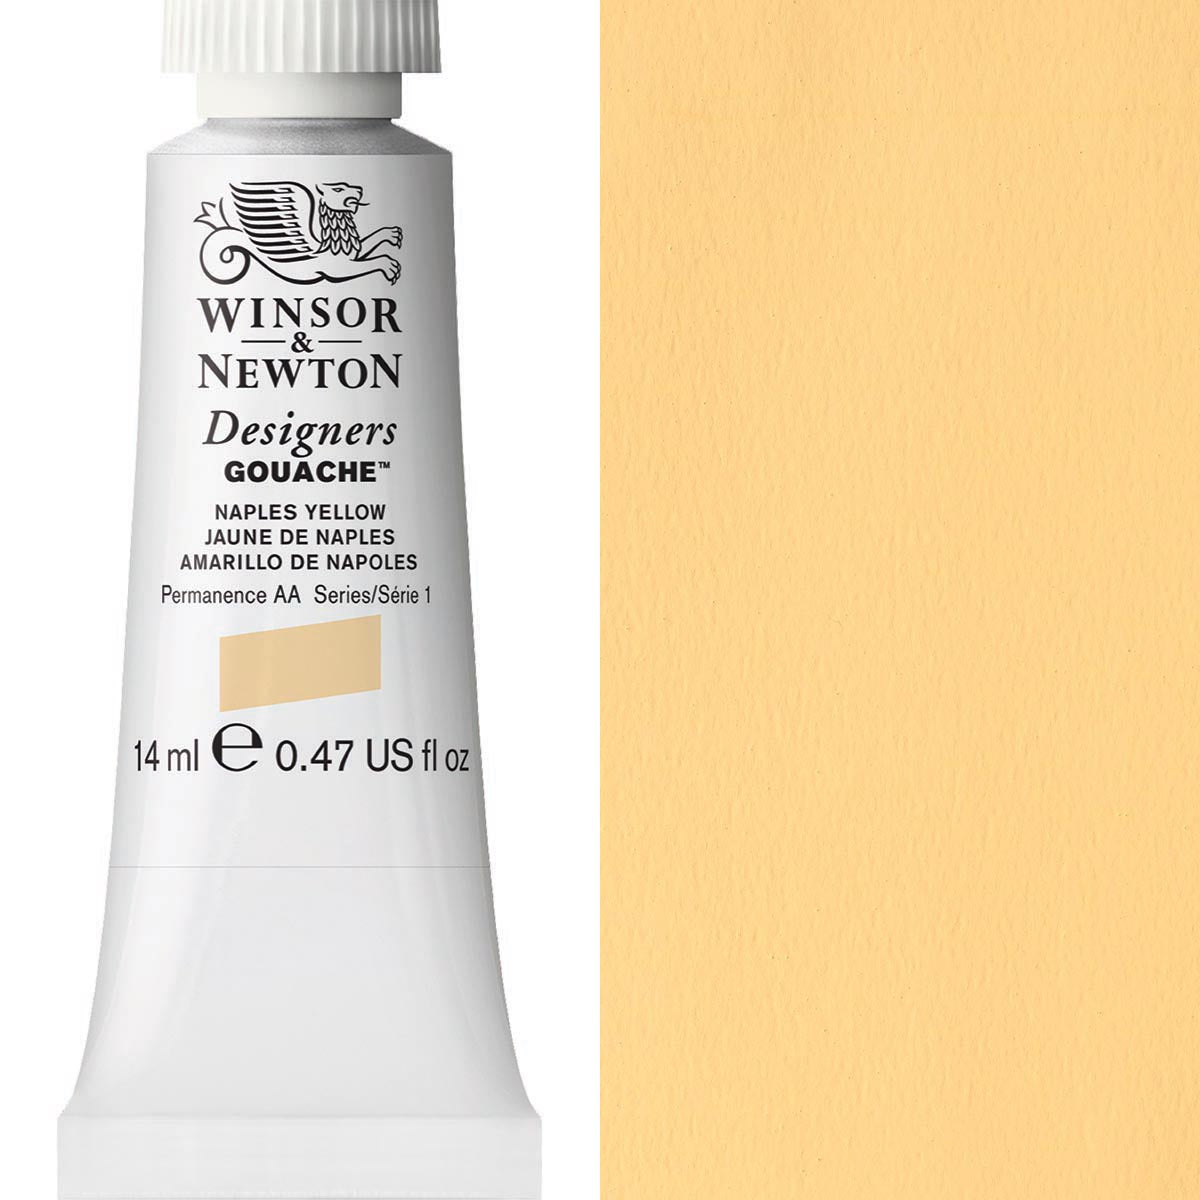 Winsor and Newton - Designers Gouache - 14ml - Naples Yellow